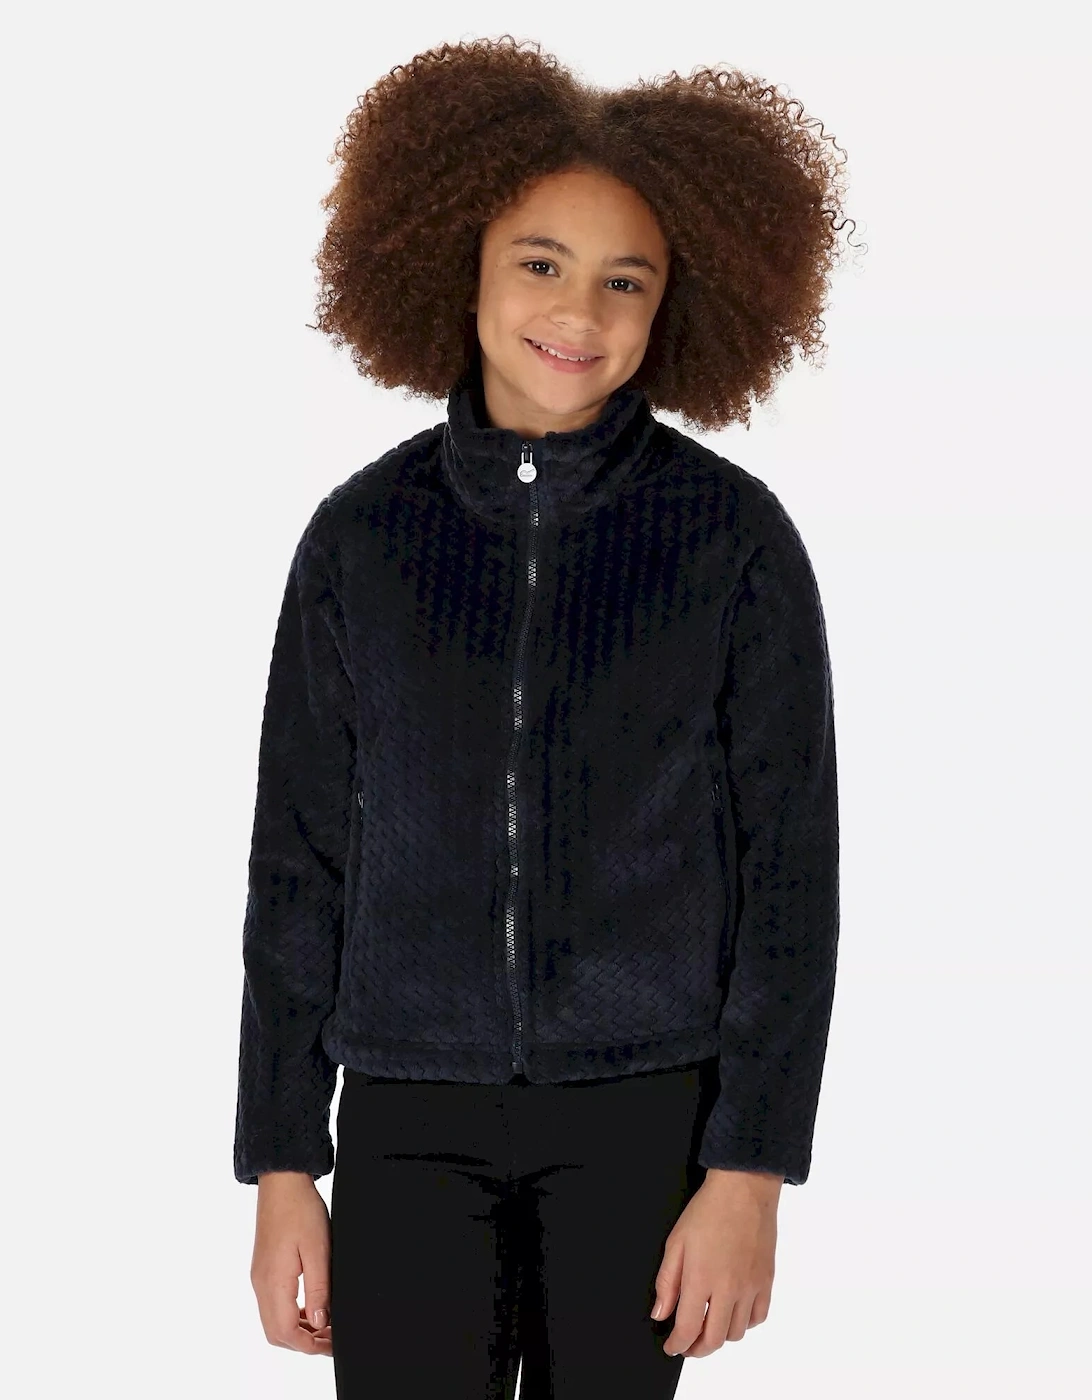 Childrens/Kids Kallye Ripple Fleece Jacket